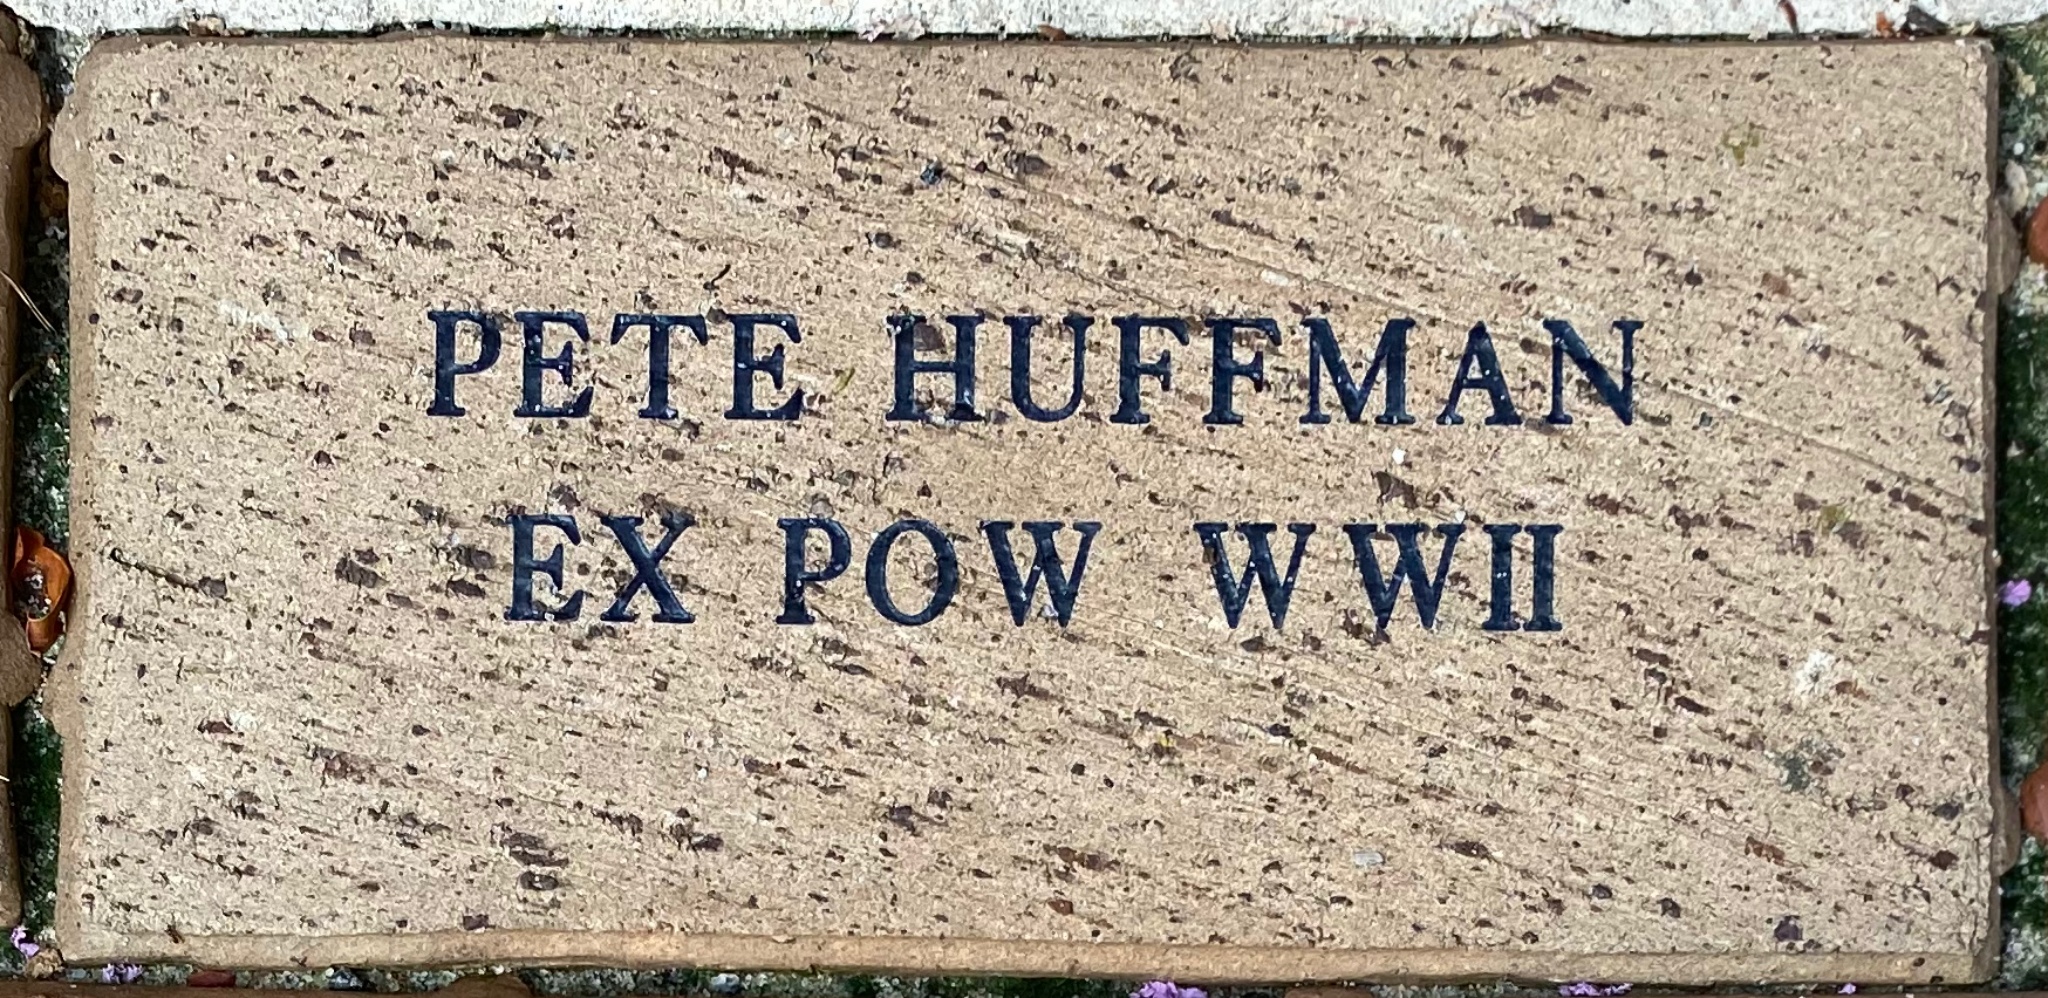 PETE HUFFMAN EX POW WWII